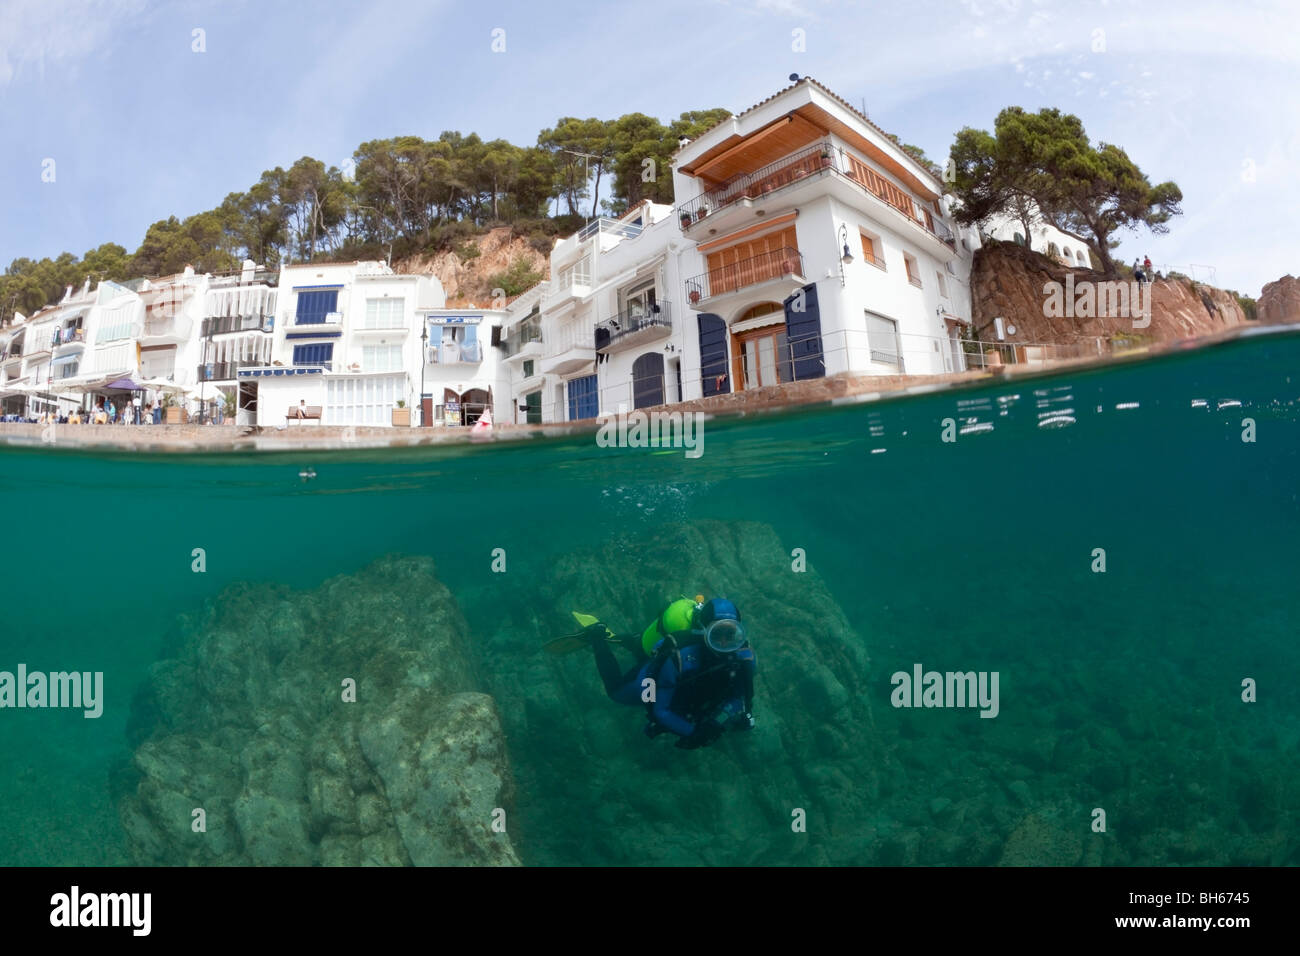 La Plongée à Tamariu, Tamariu, Costa Brava, Espagne, Mer Méditerranée Banque D'Images